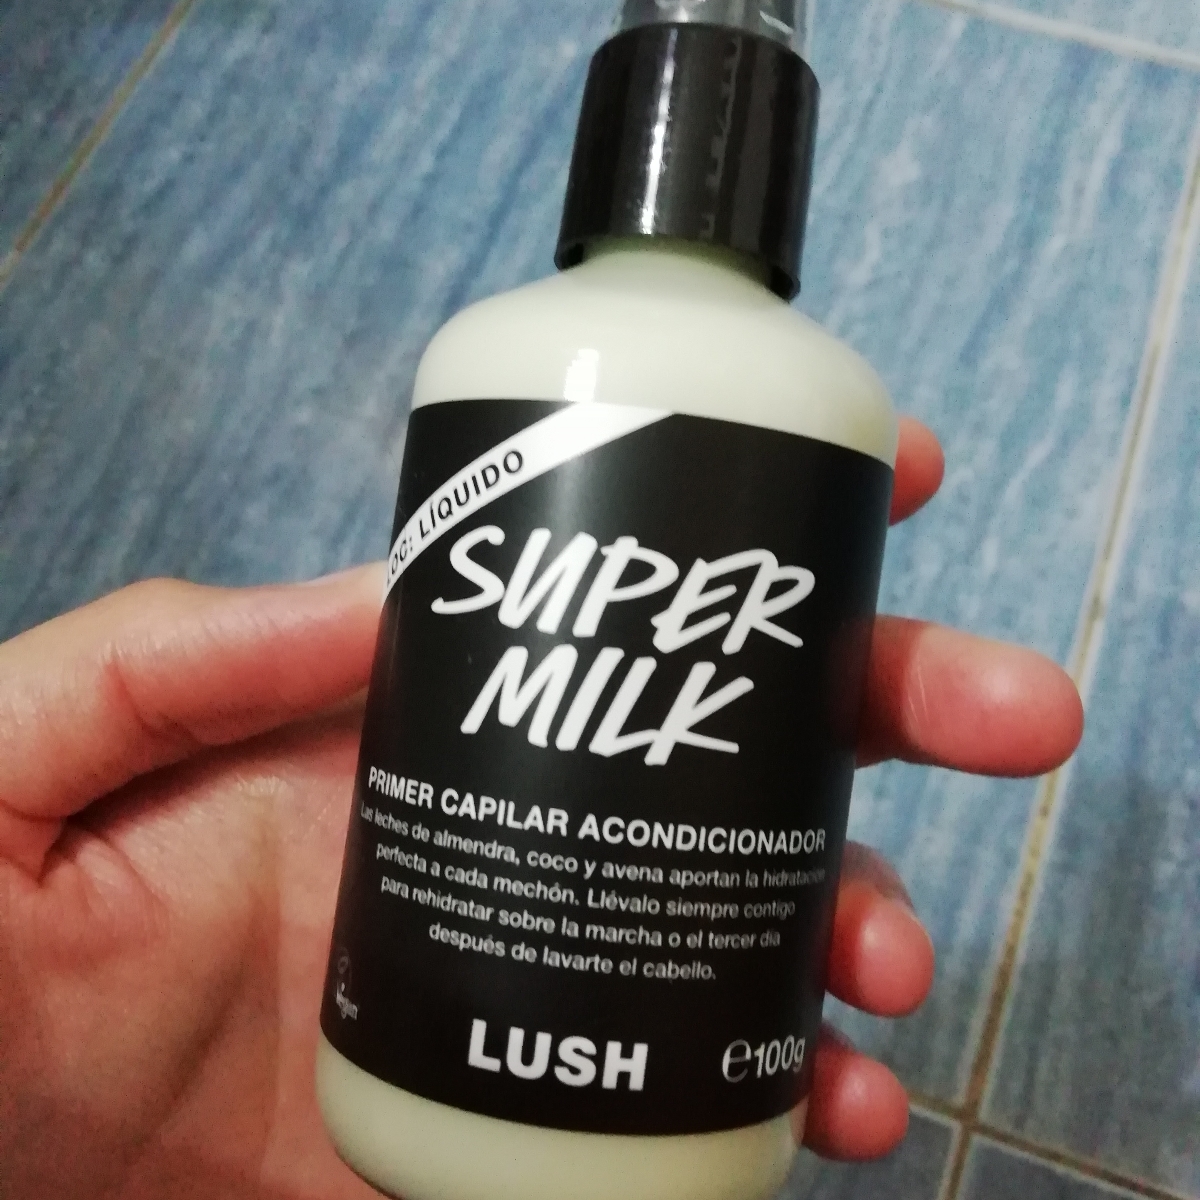 LUSH South Africa - Super Milk Conditioning Spray ✨ This vegan